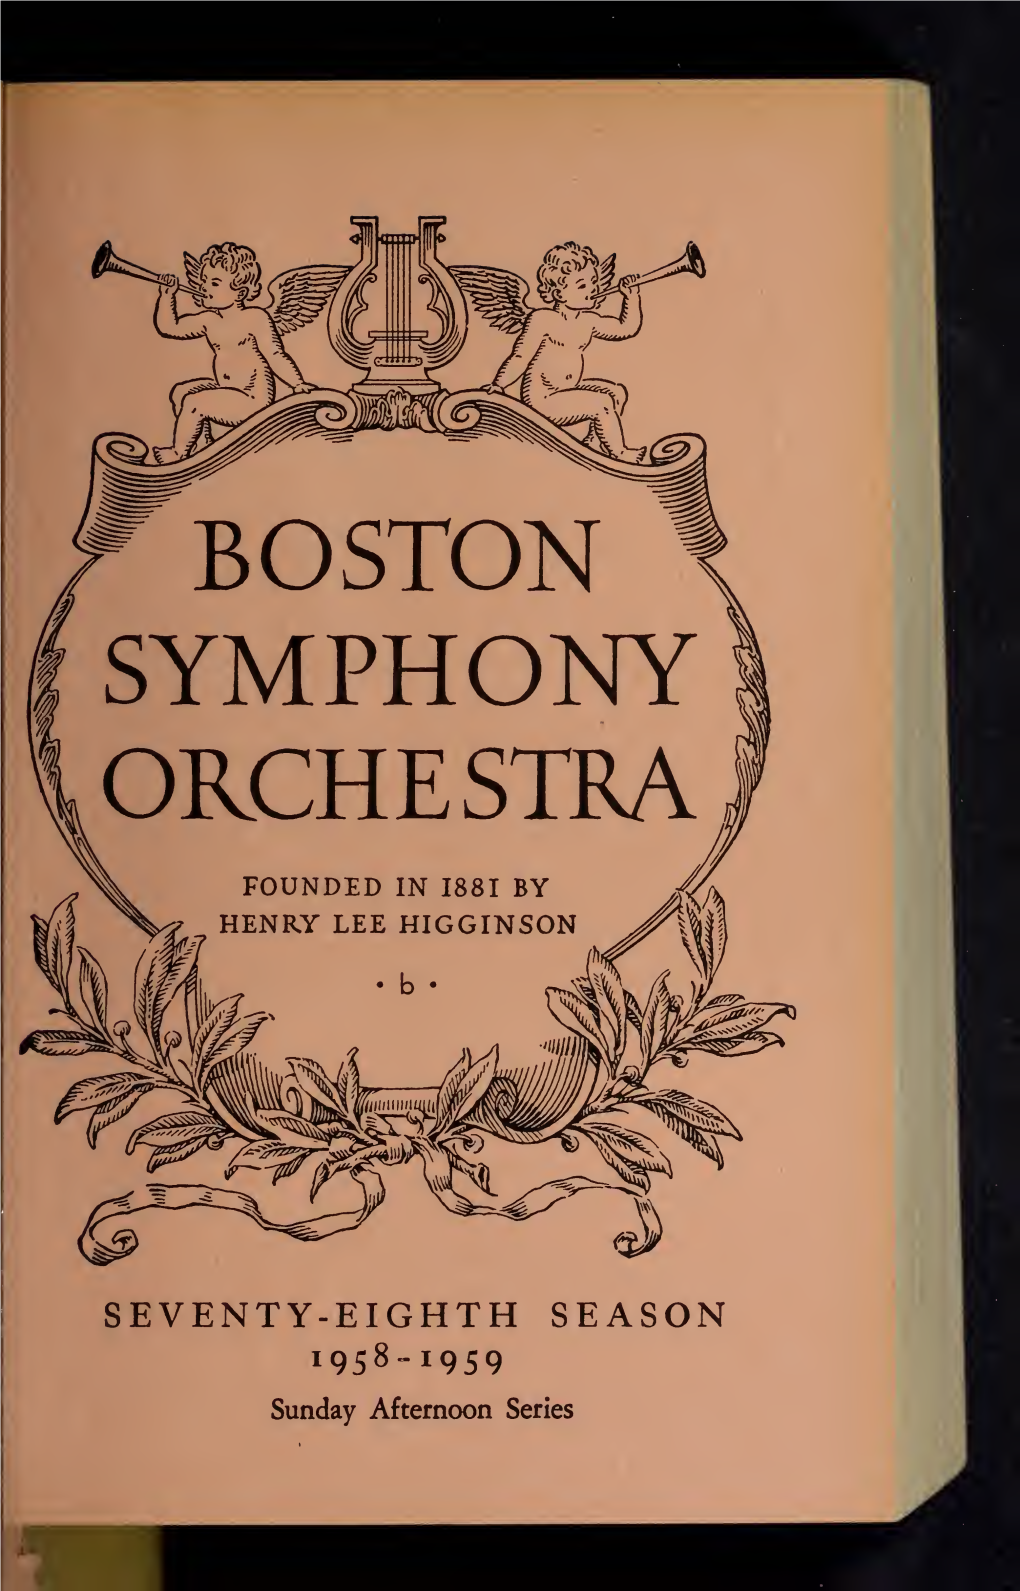 Boston Symphony Orchestra Concert Programs, Season 78, 1958-1959